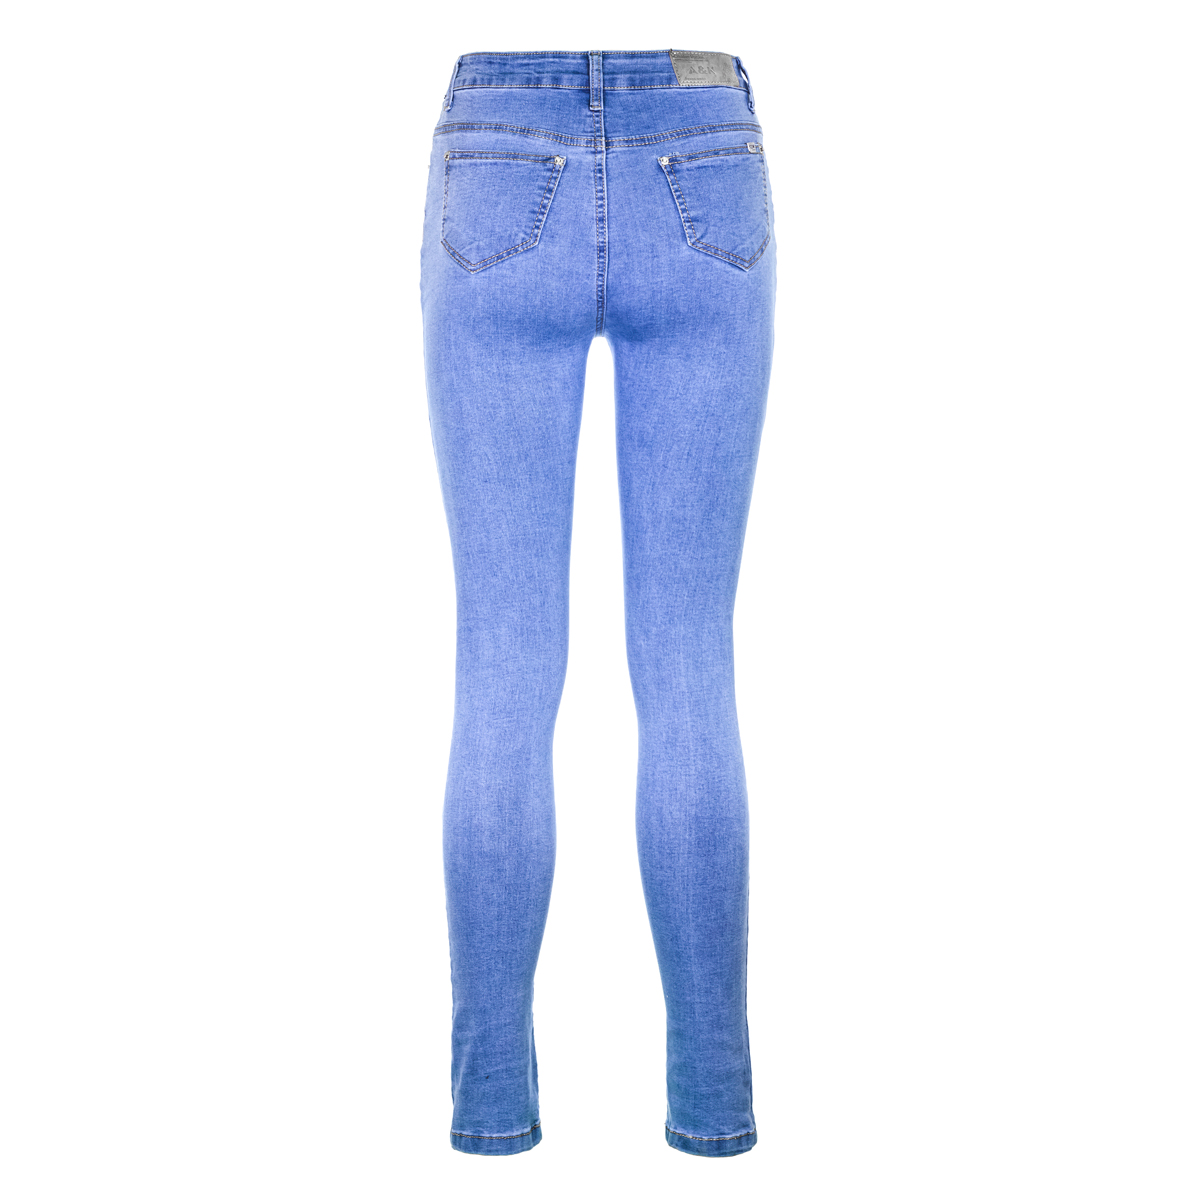 Жен. джинсы арт. 12-0155 Голубой р. 29 Китай, размер 29 - фото 3